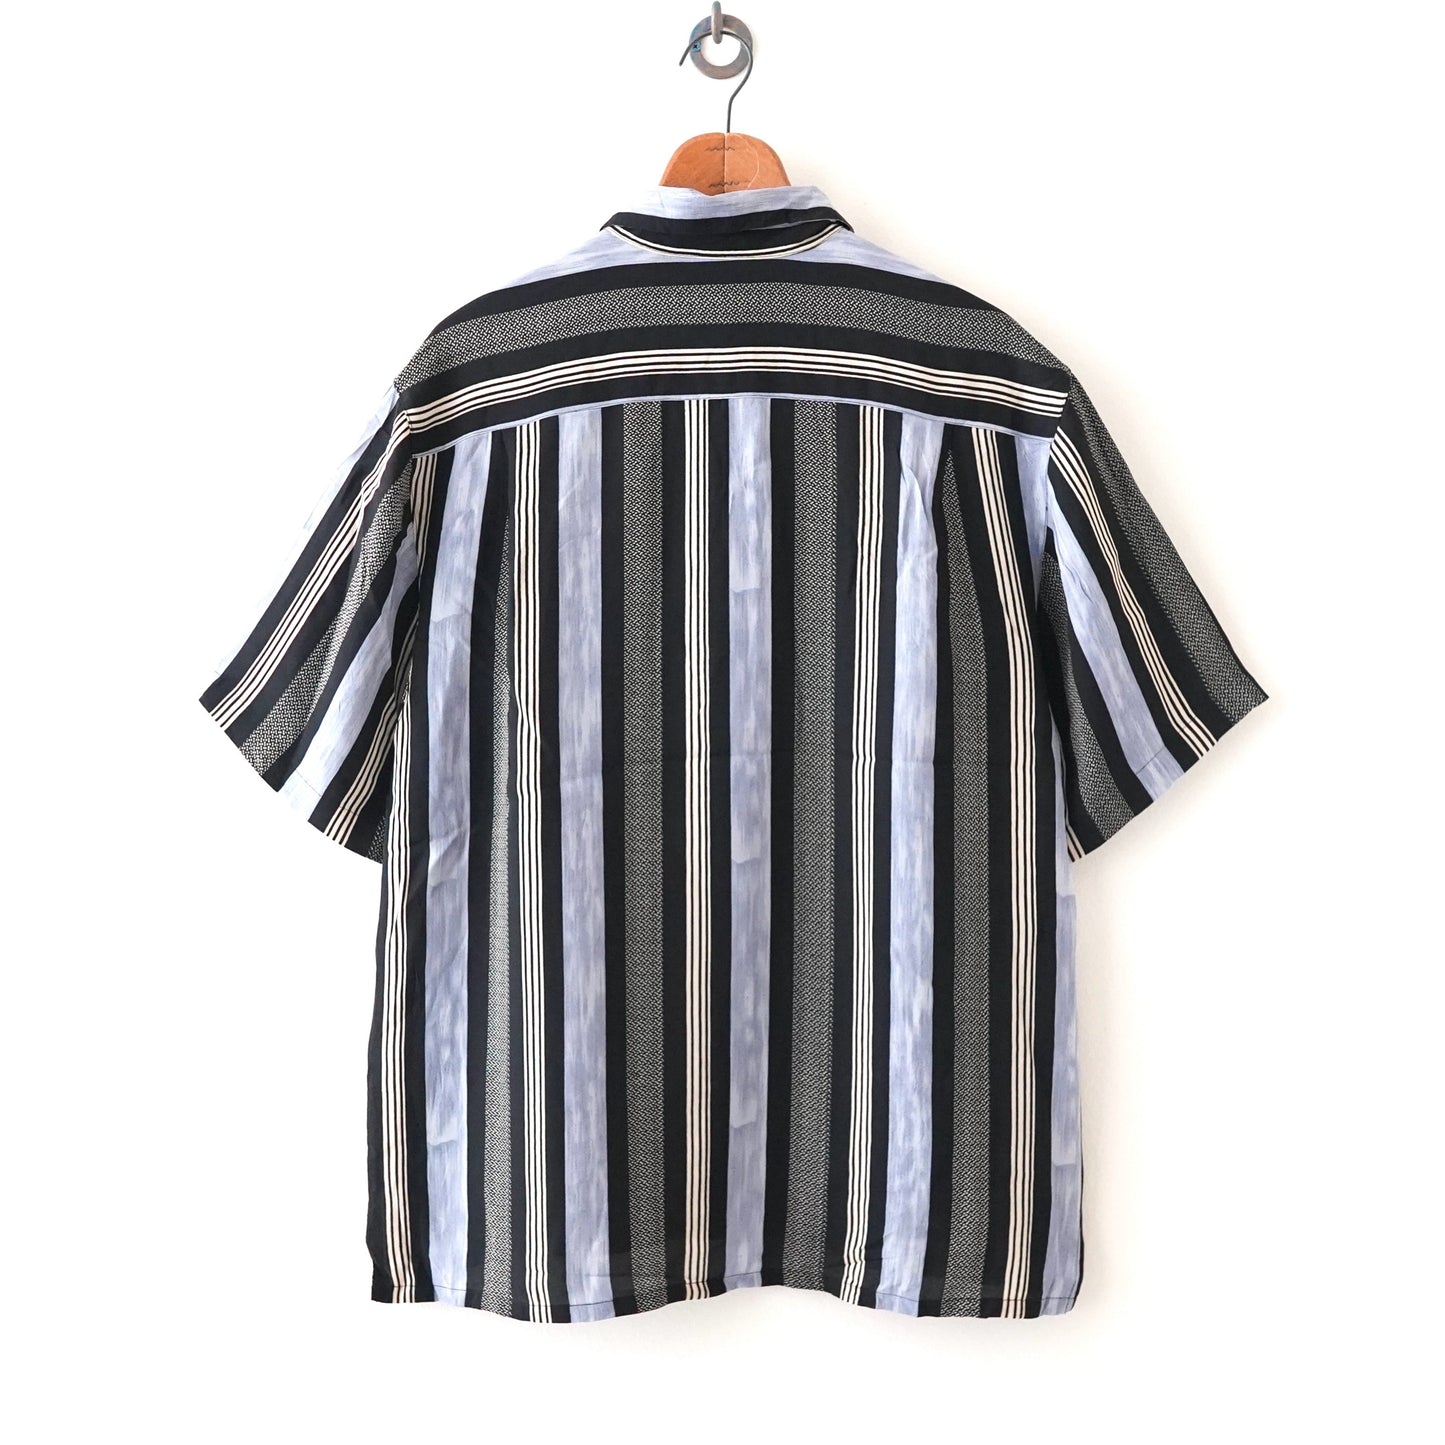 90s stripe shirt